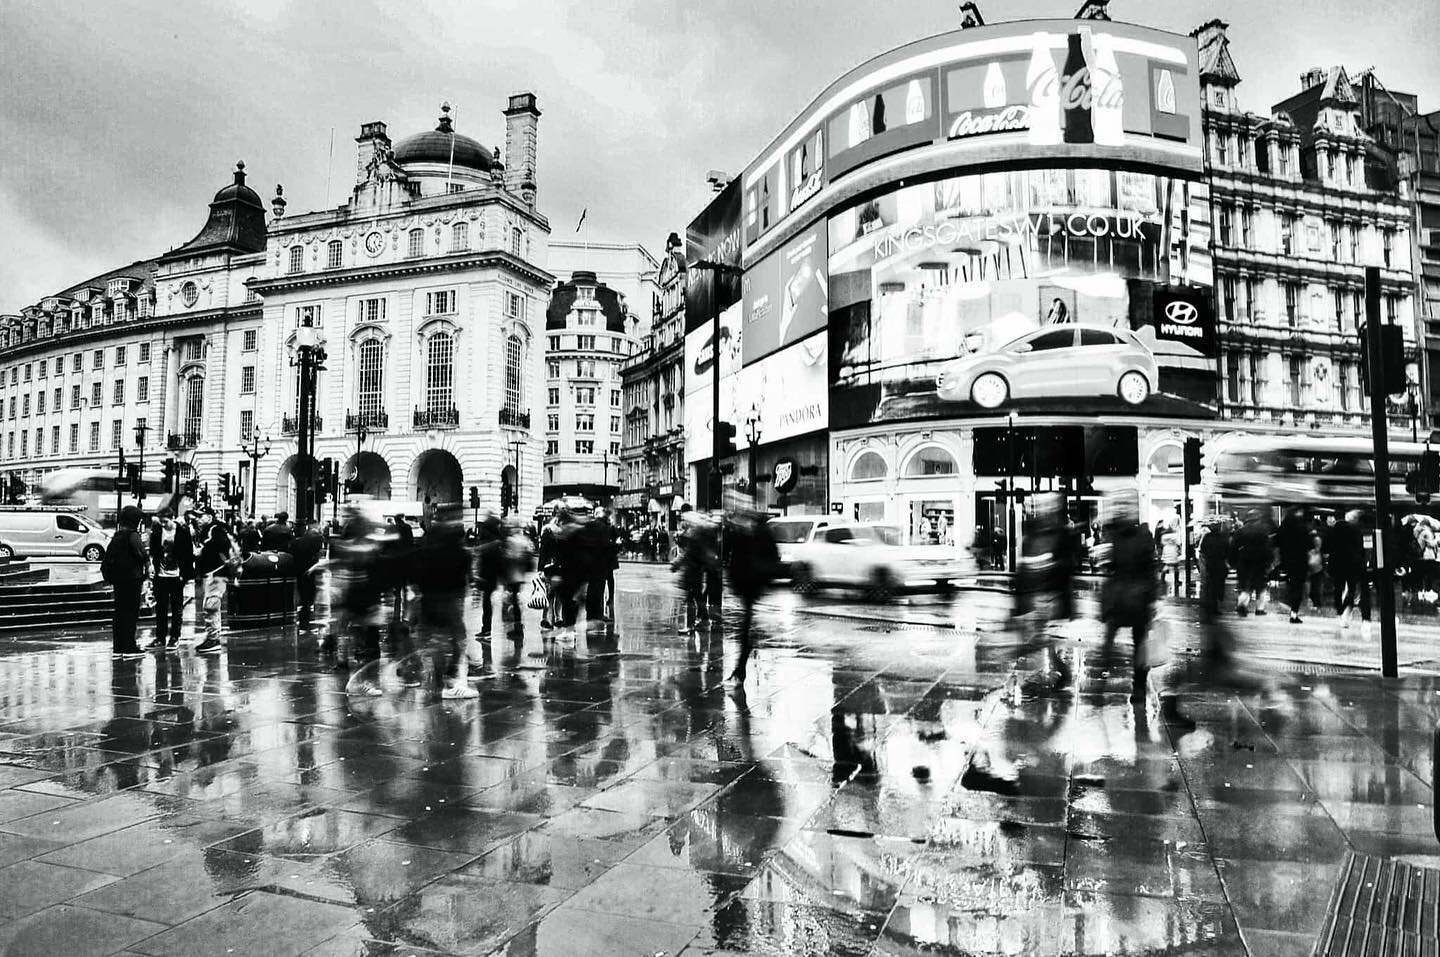 Piccadilly Circus #london #londonlife #londoncity #piccadilly #piccadillycircus #londonview #london🇬🇧 #londonphotography #londonphoto #londonphotographer #londonarchitecture #architecturelondon #blackandwhitephotography #bwphoto #bwphotograpy #rain